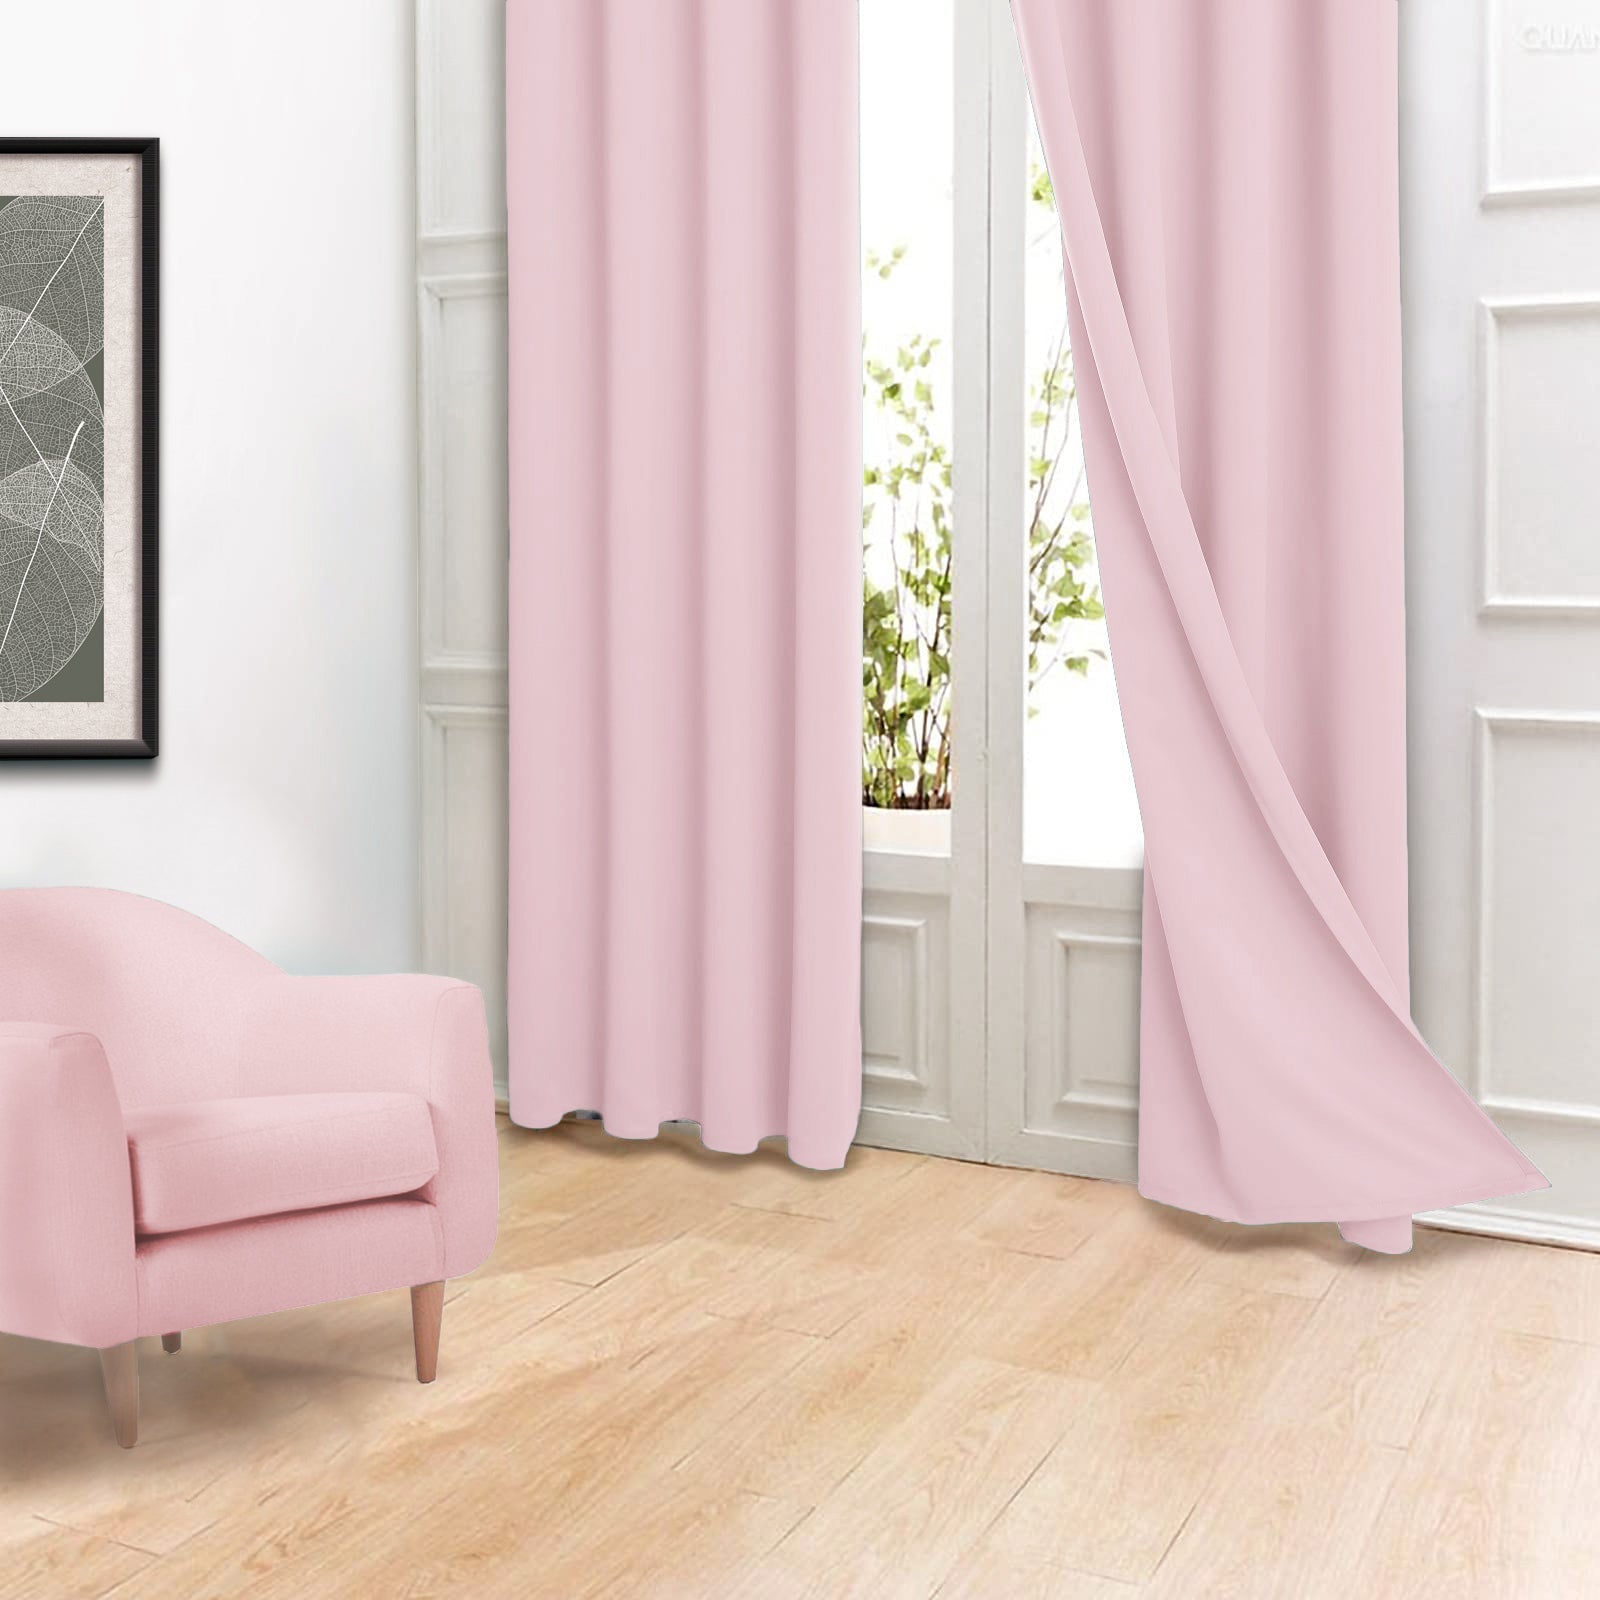 Akarise Blackout Curtains for Bedroom Living Room - 2 Panels,Pink